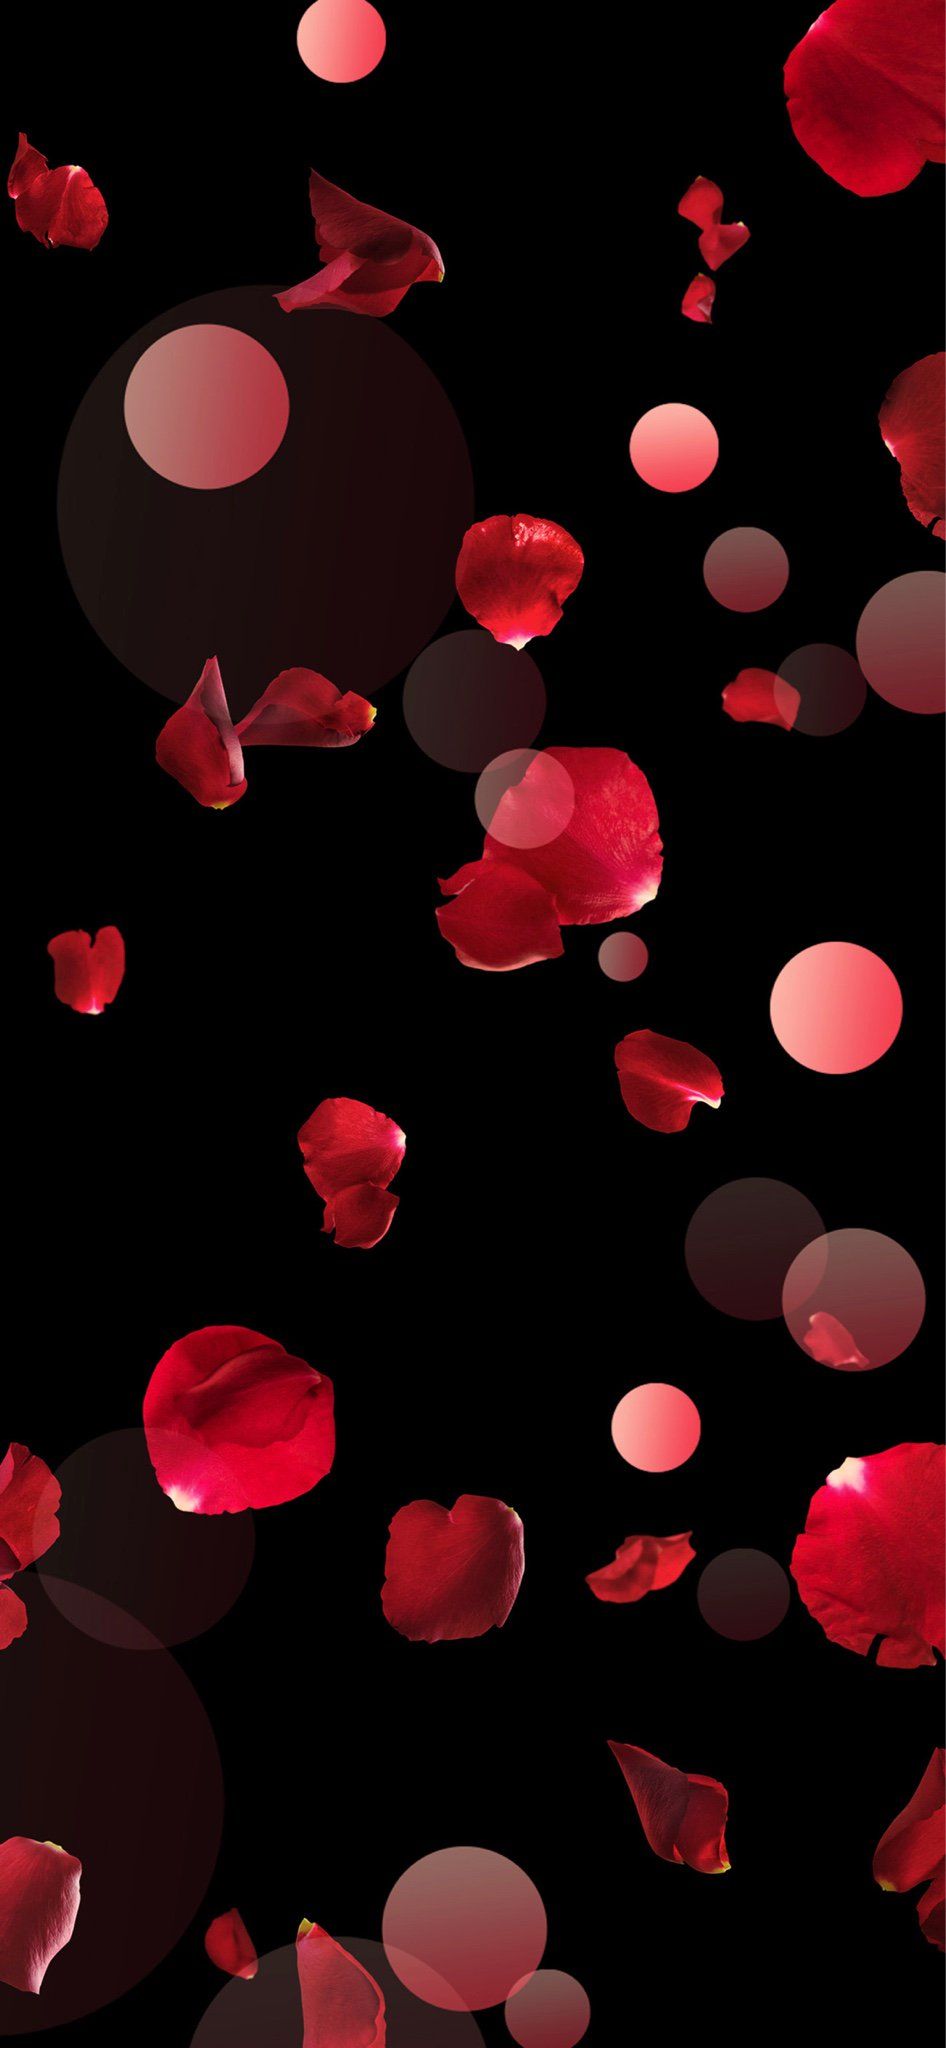 Free Download Rose Petals Cute Wallpapers Wallpaper Backgrounds